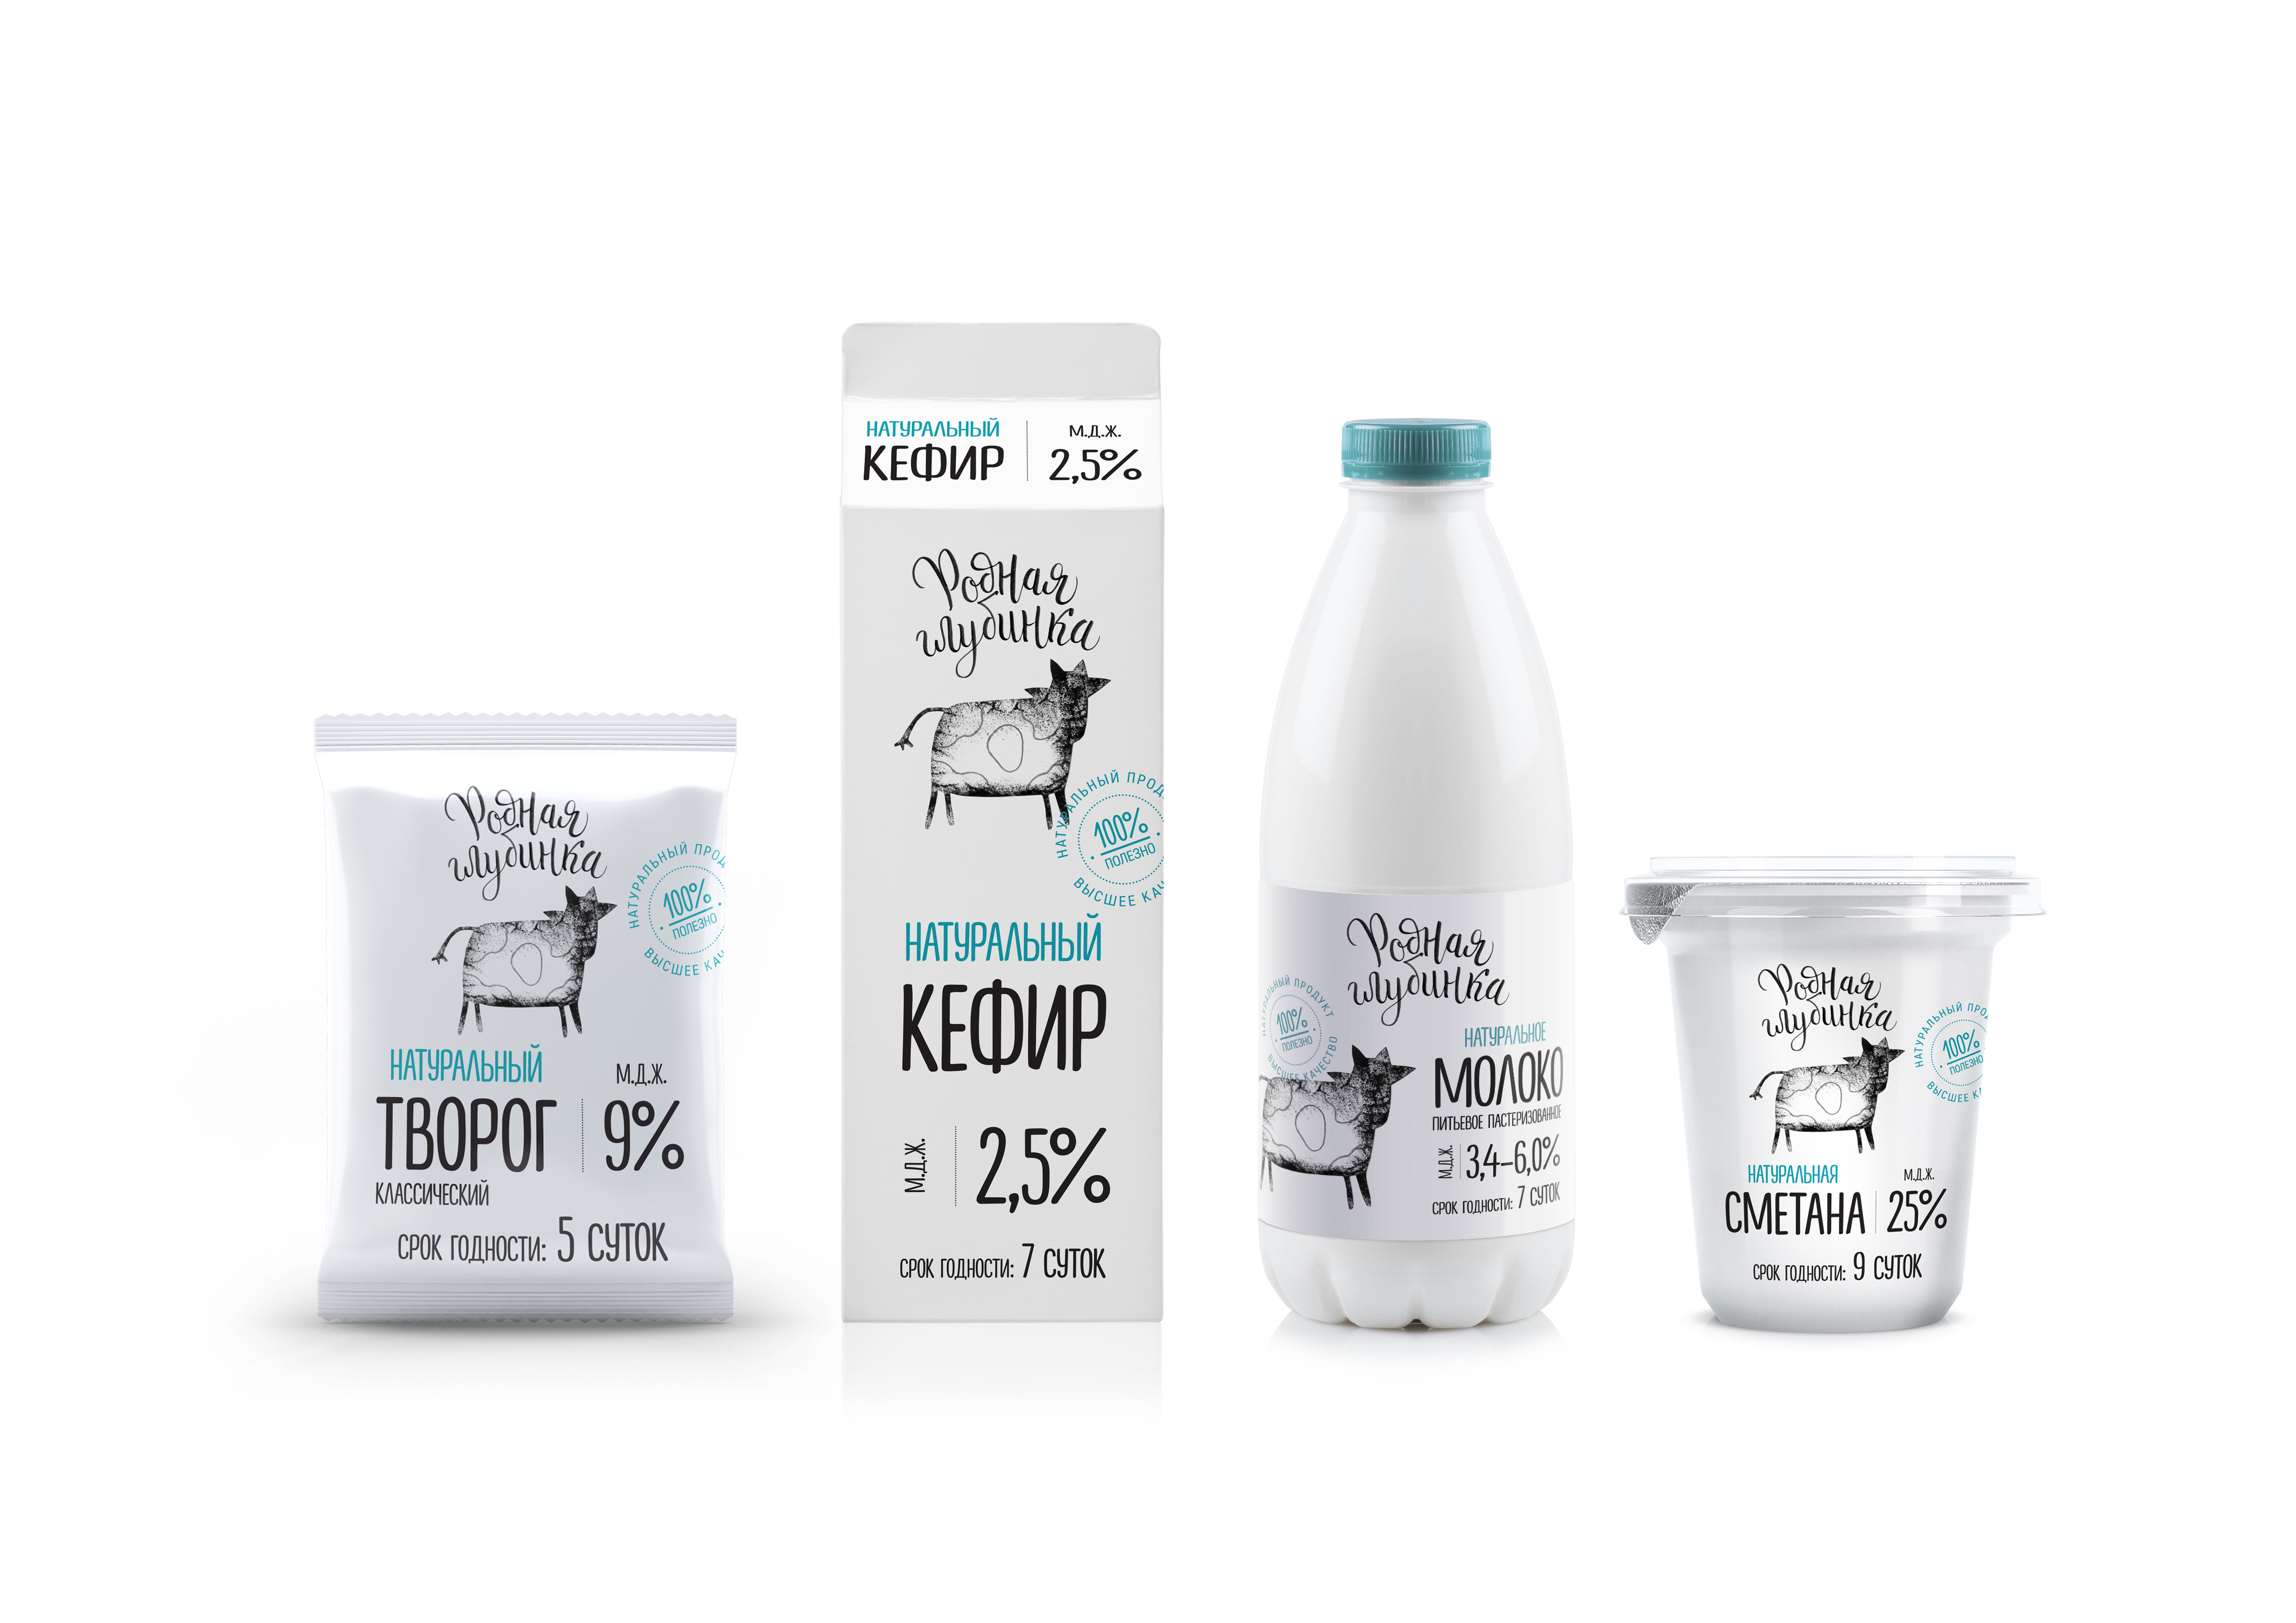 Concept Packaging Design of Dairy Farm Products, Designed by Alisa Vorkunova